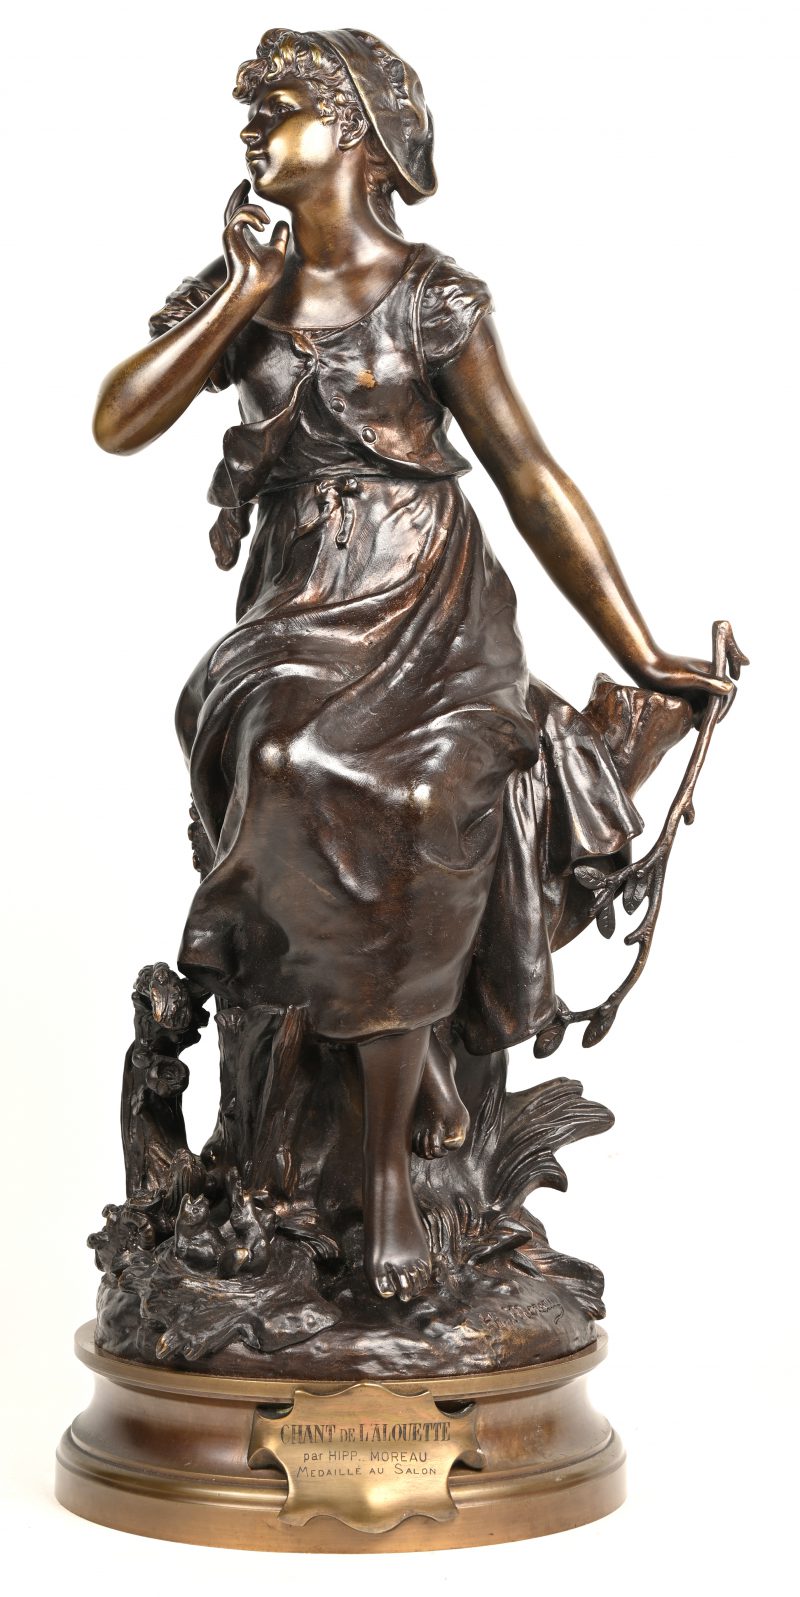 “Chant d’alouette”, in gepatineerd brons gesculpteerd beeld, gesign “Hippolyte Moreau”, stempel “Medaille au salon”